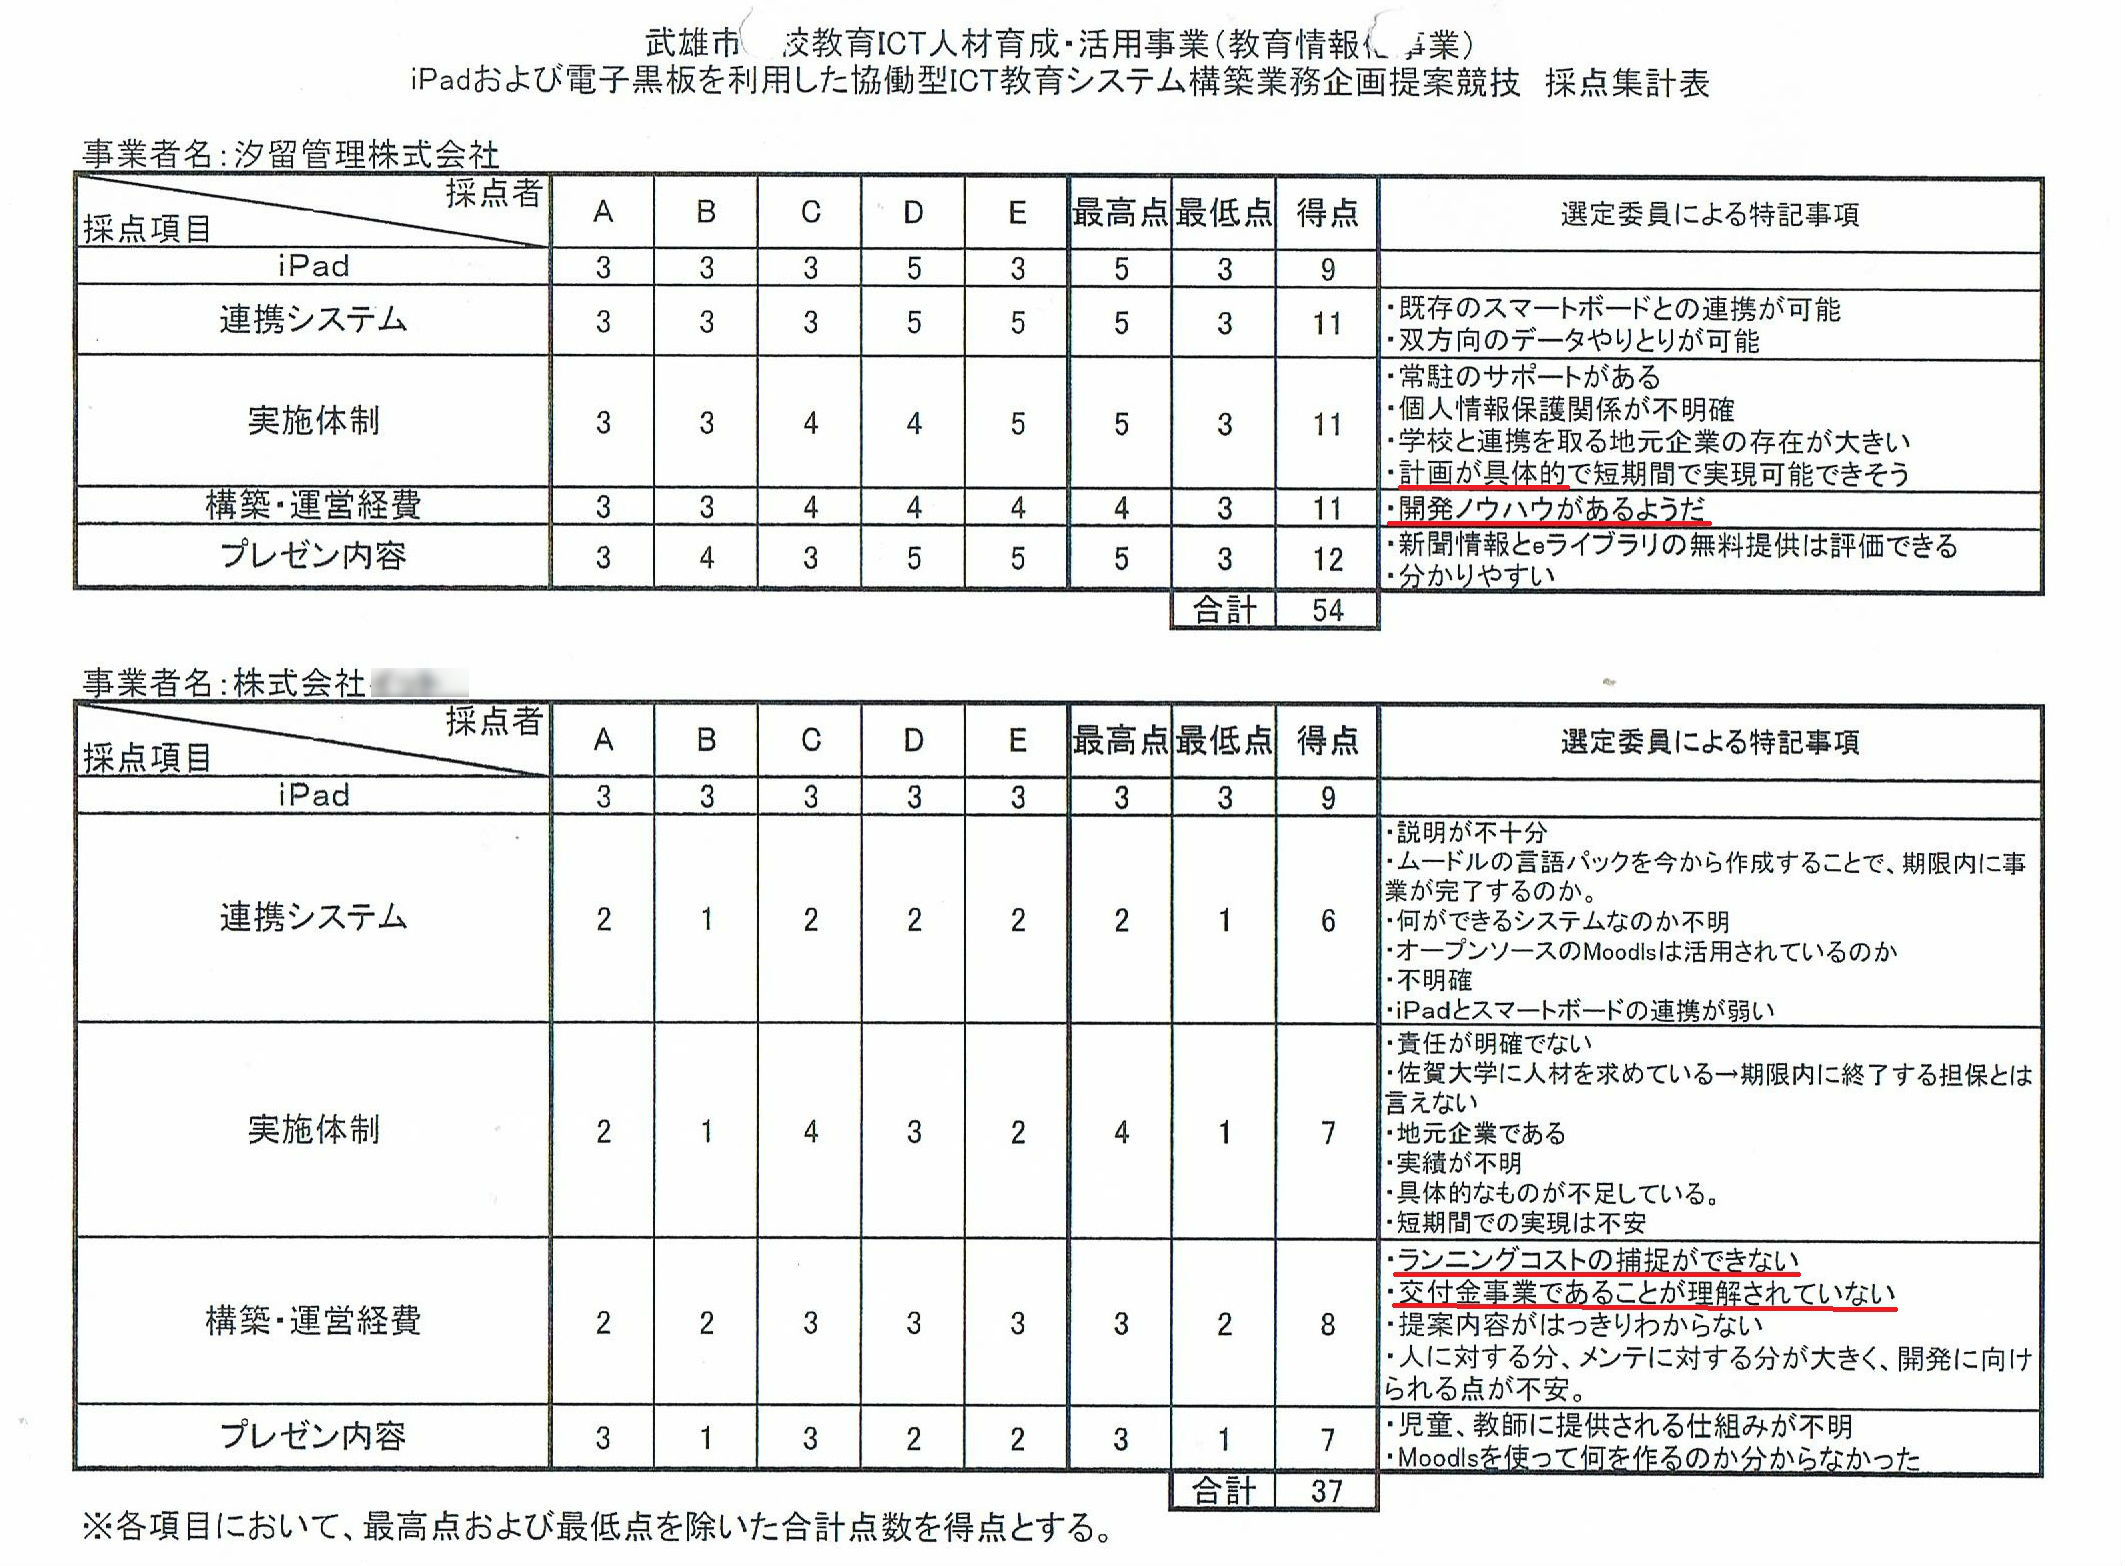 http://hunter-investigate.jp/news/2015/04/23/%E6%8E%A1%E7%82%B9%E8%A1%A8.jpg